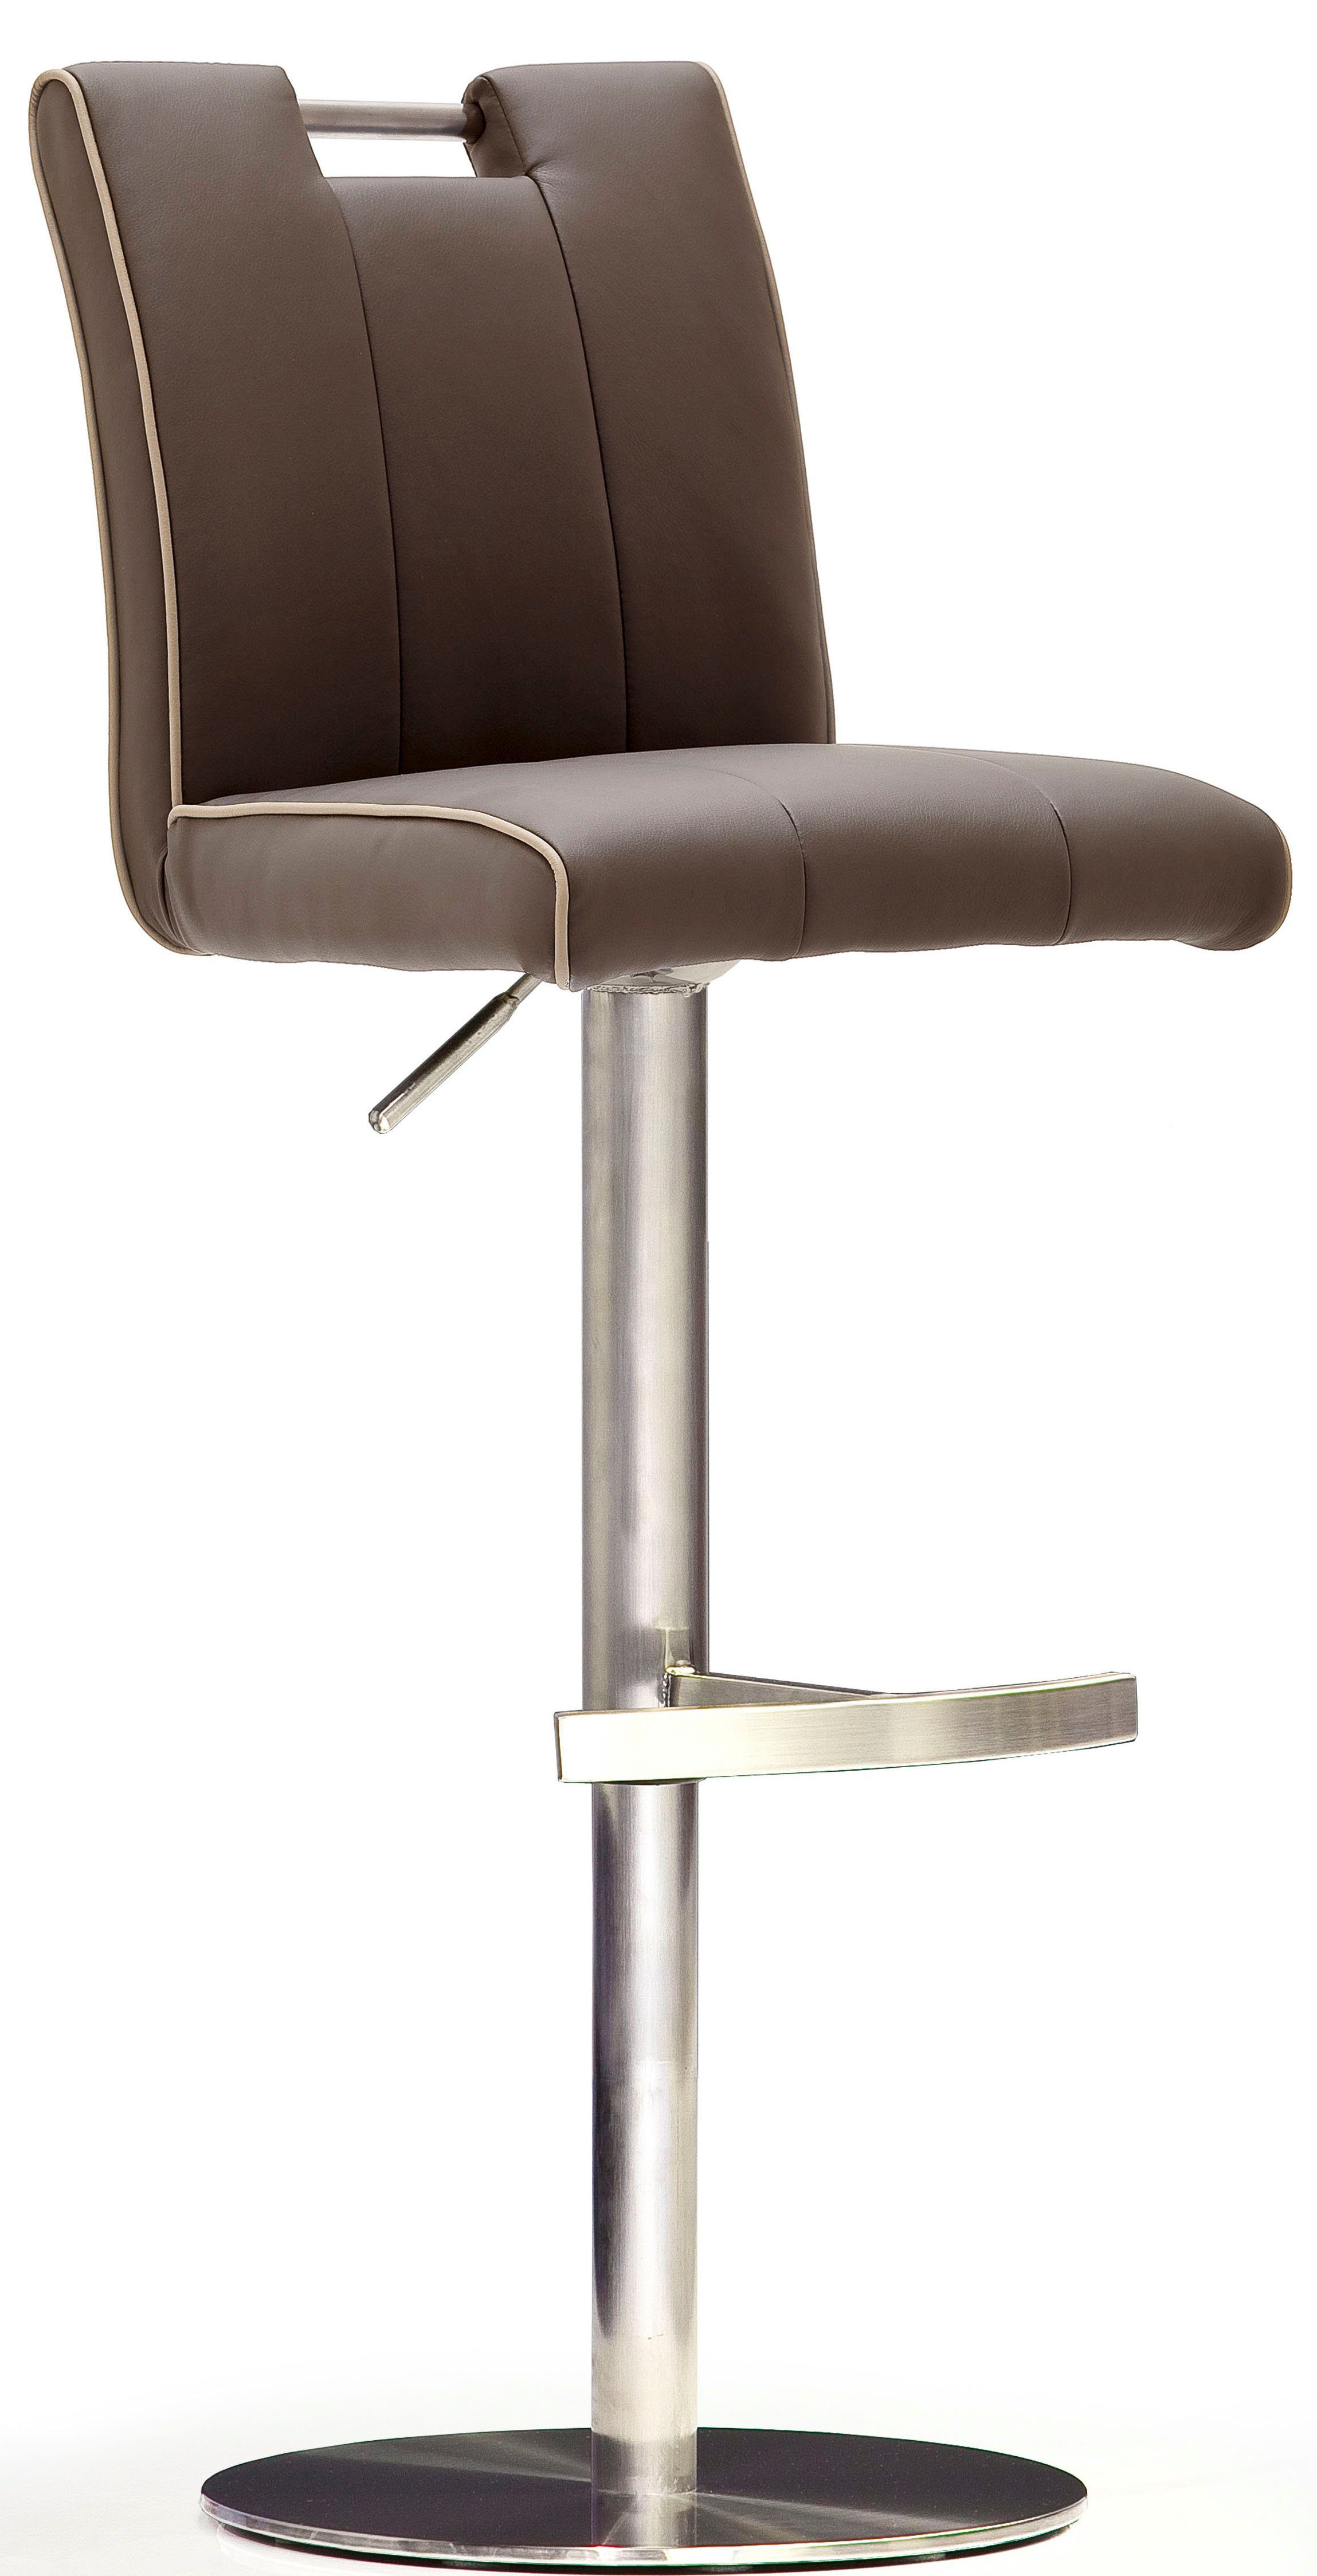 MCA braun furniture | Bistrostuhl BARBECOOL braun